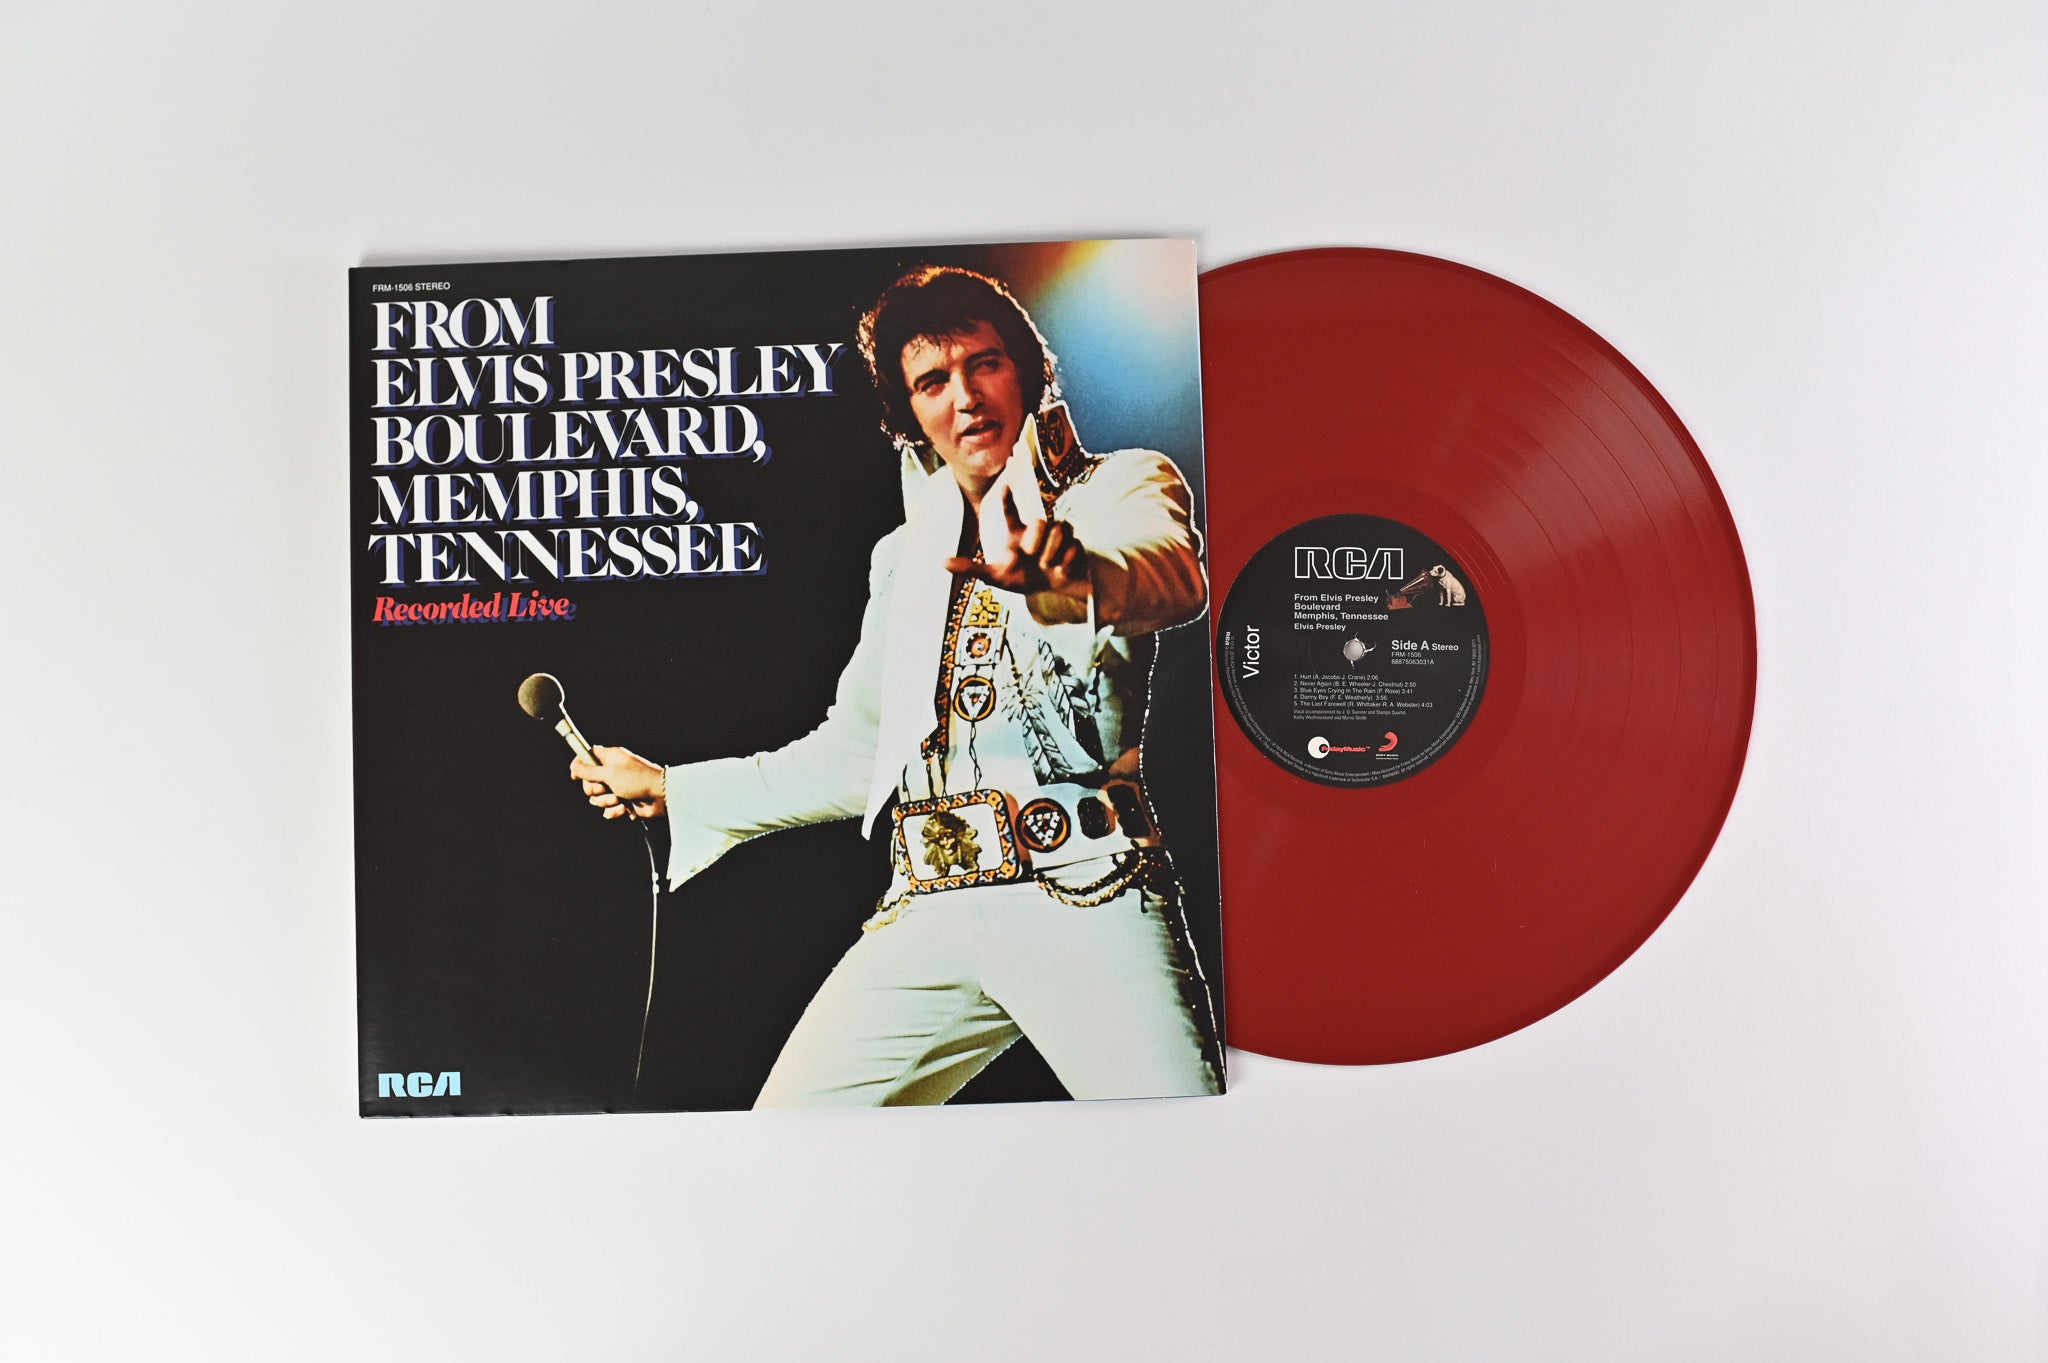 Elvis Presley - From Elvis Presley Boulevard, Memphis, Tennessee Reissue on Friday Music Burgundy Red Vinyl